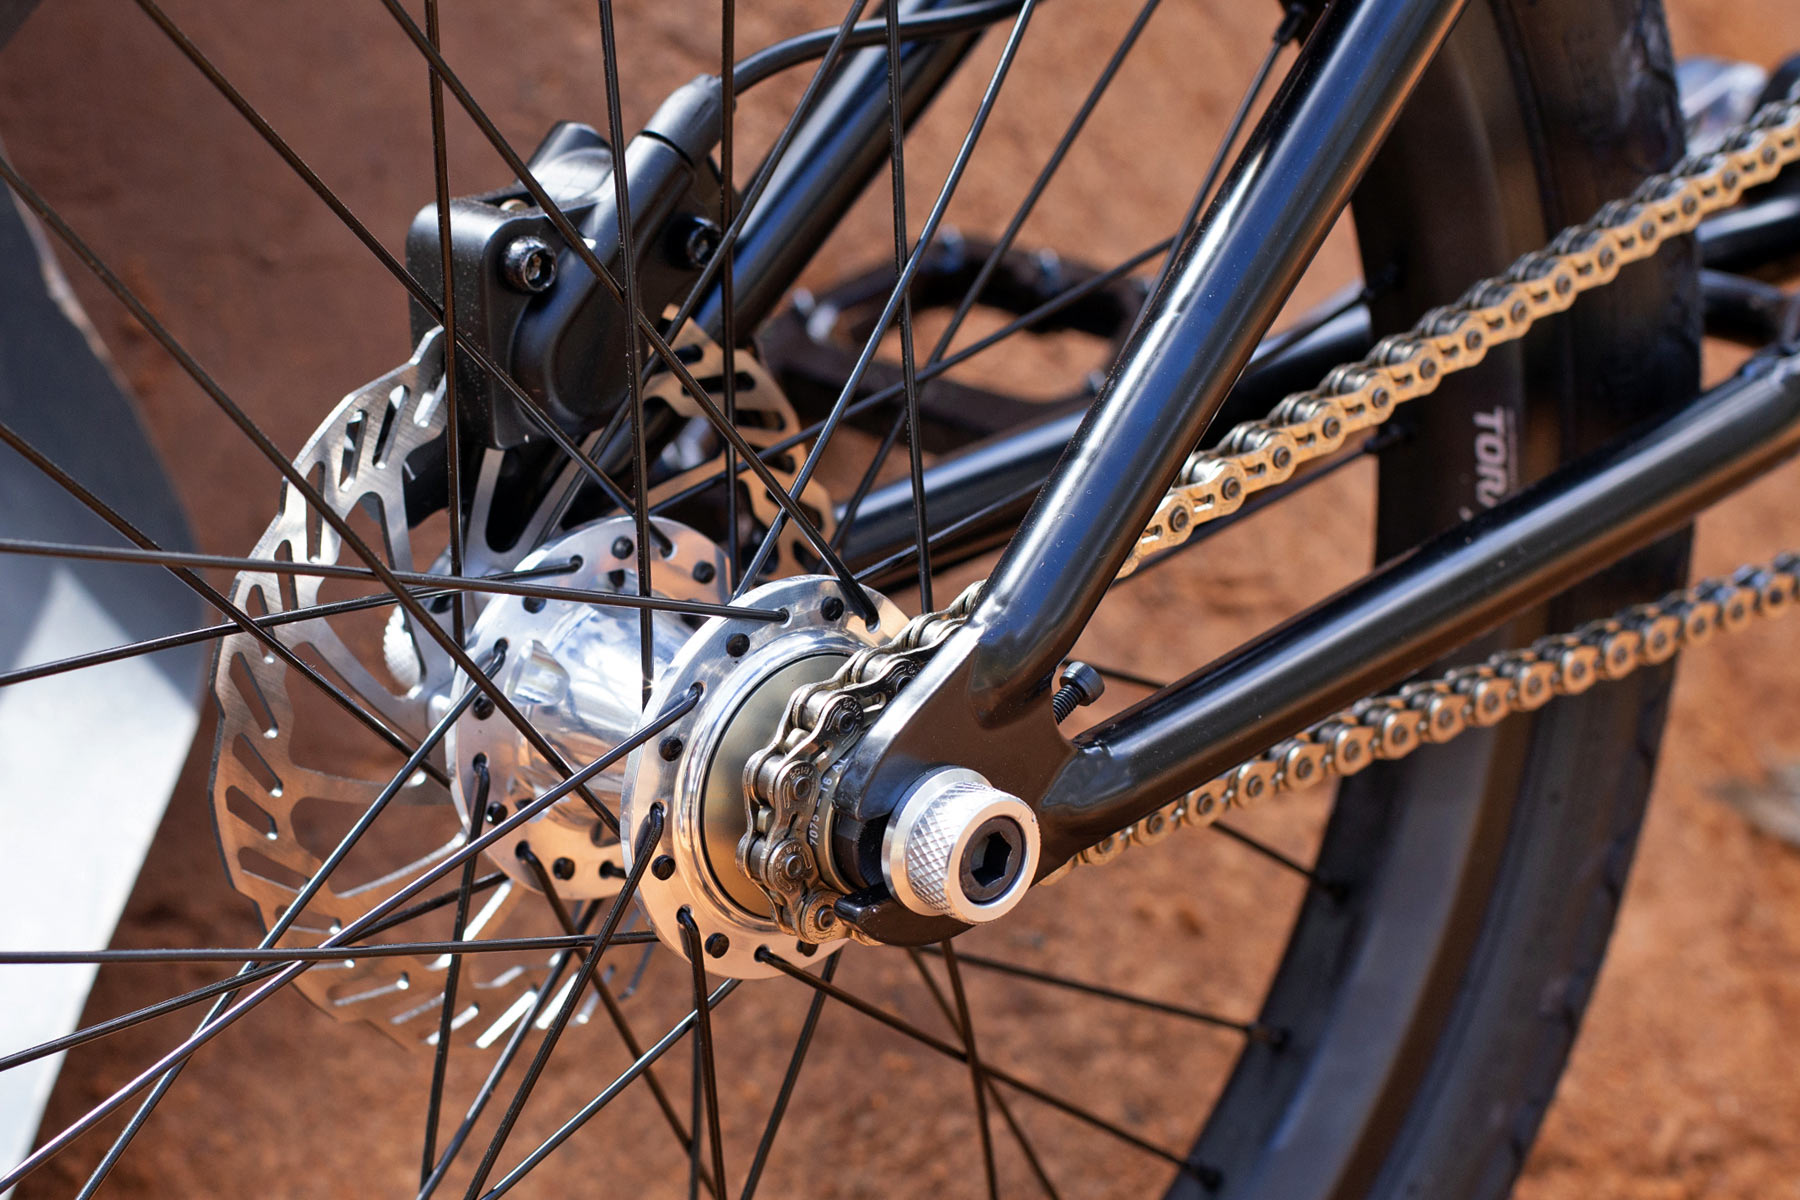 WTP Chaos Machine disc brake BMX bike, Tyson Jones-Peni pro bike check, Radio Raceline hydraulic disc brake